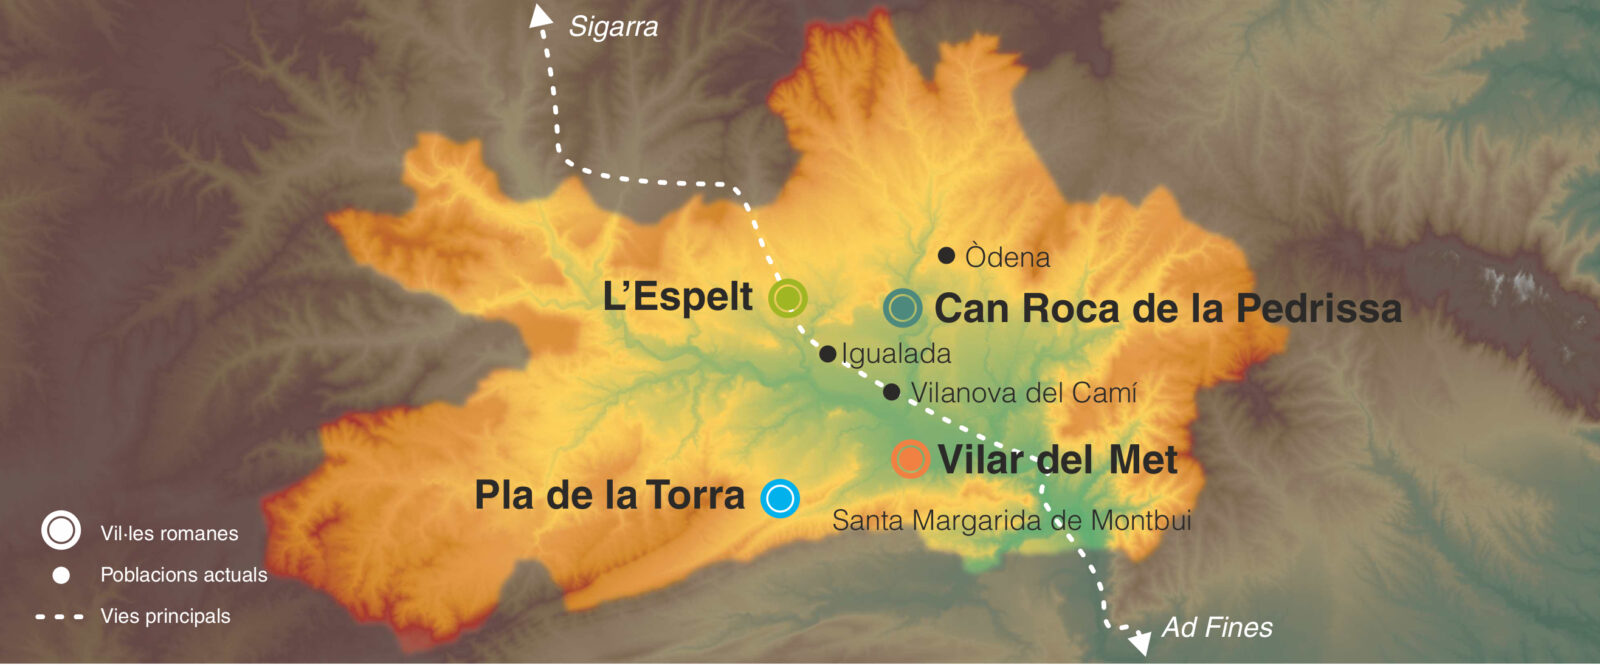 mapa viles conca odena